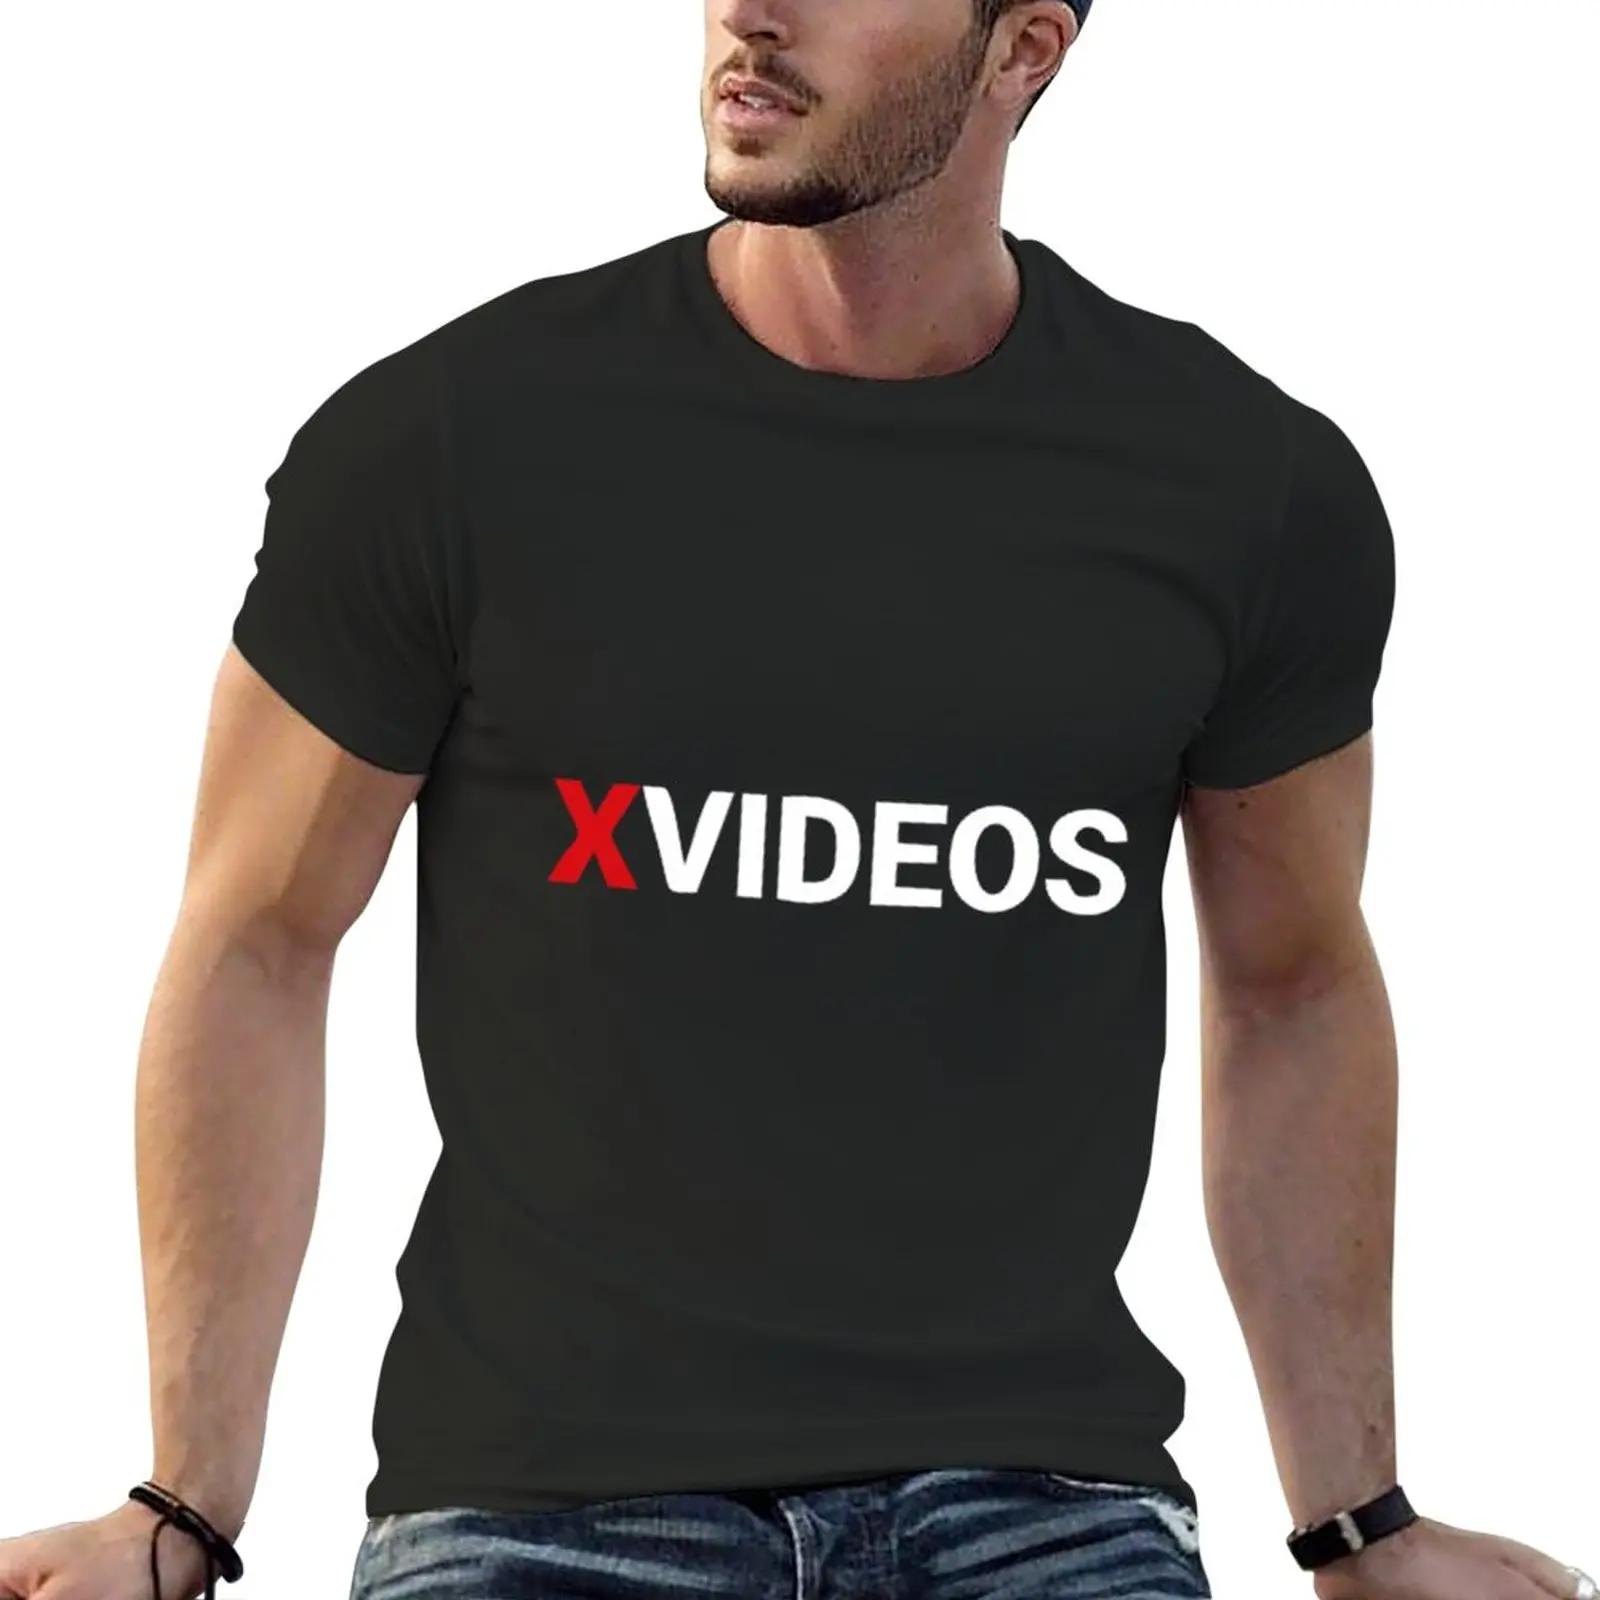 Top Collection Xvideos Authentic Design T-Shirt sublime t shirt t-shirts man hippie clothes Men's t shirts